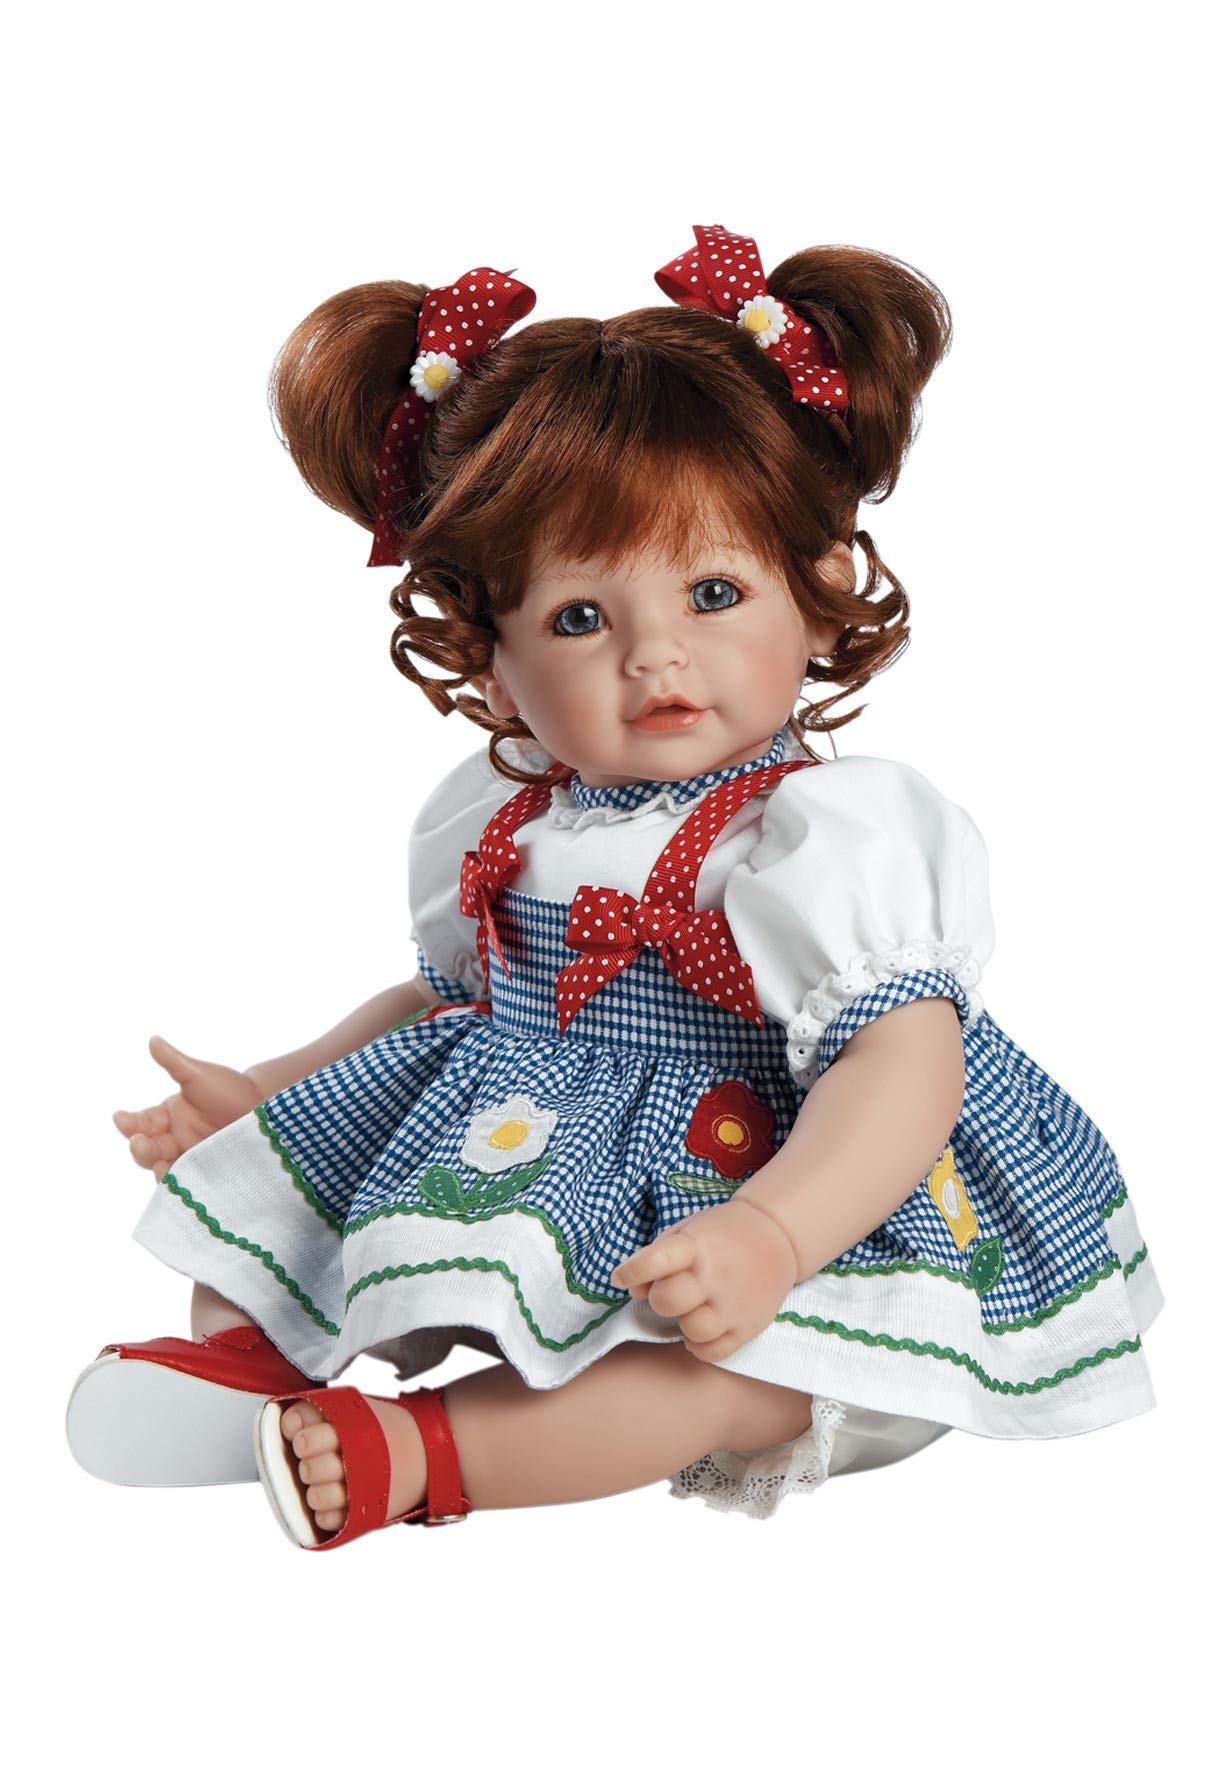 Adora Realistic Baby Doll Daisy Delight Toddler Doll - 20 inch, Soft CuddleMe Vinyl, Auburn Red Hair, Blue Eyes